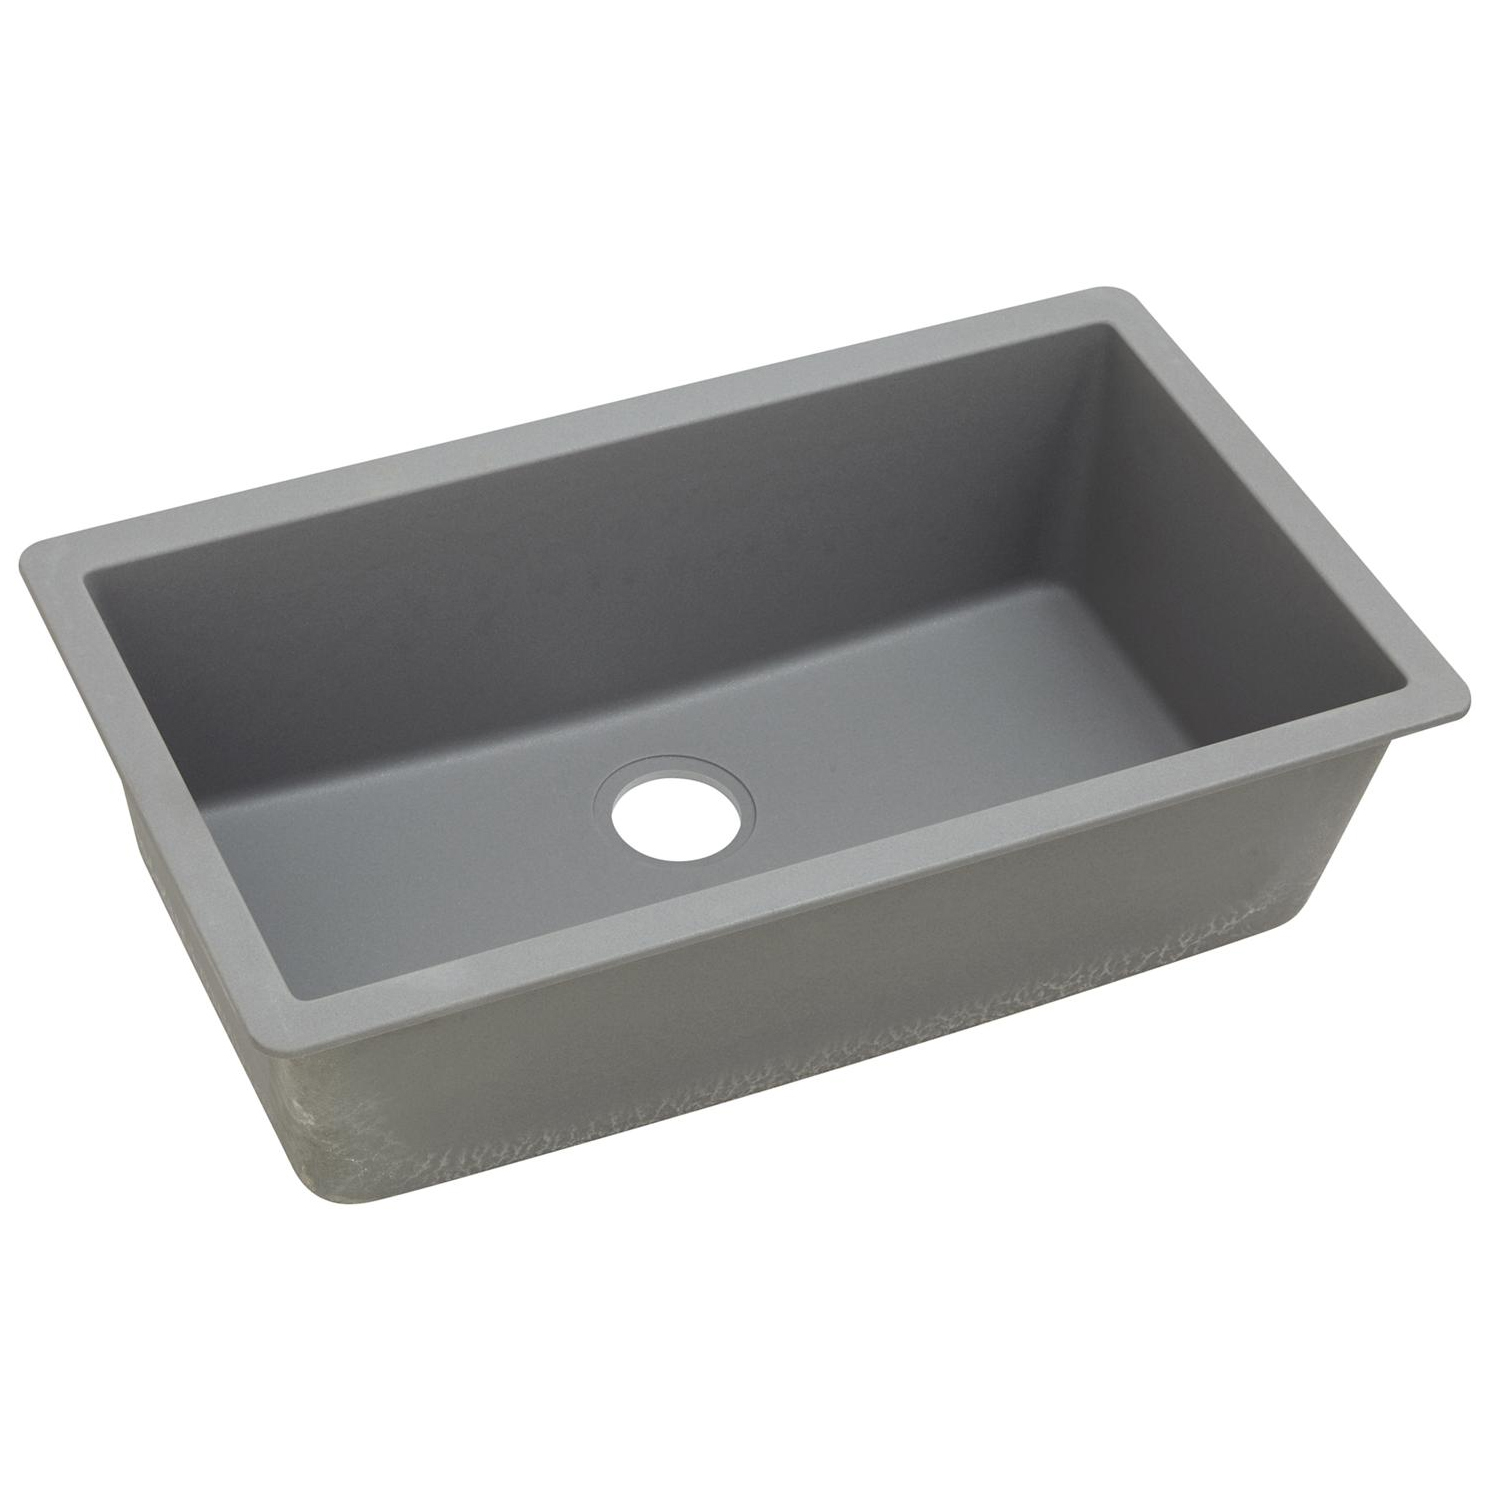 Quartz Classic 33x18-7/16x9-7/16" Single Bowl Sink Greystone